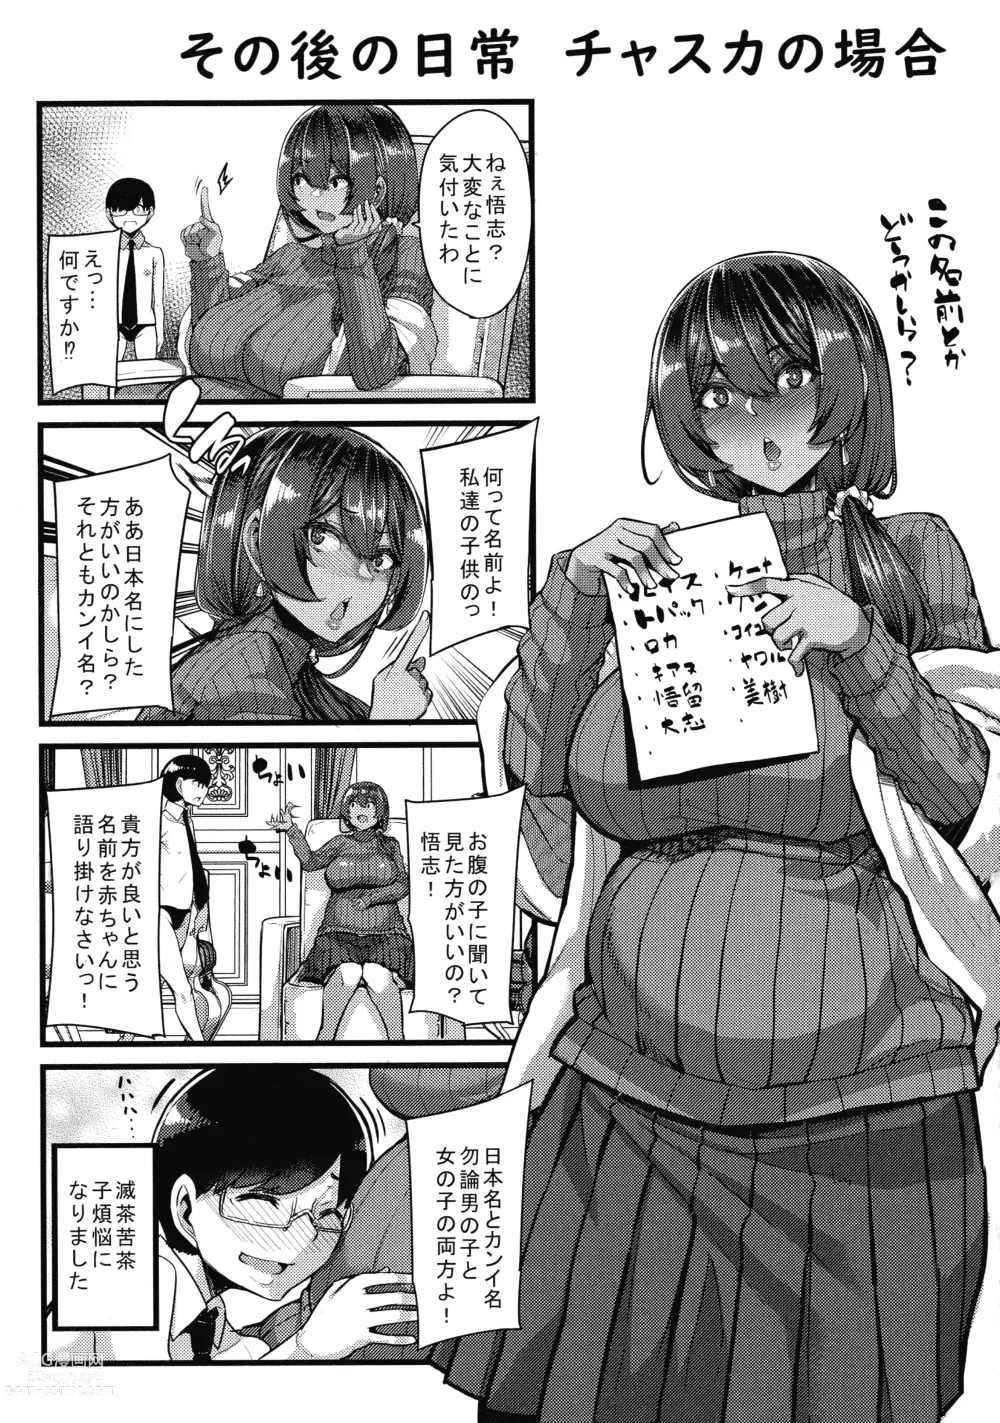 Page 201 of manga Kasshoku Hime to Himitsu no Keiyaku